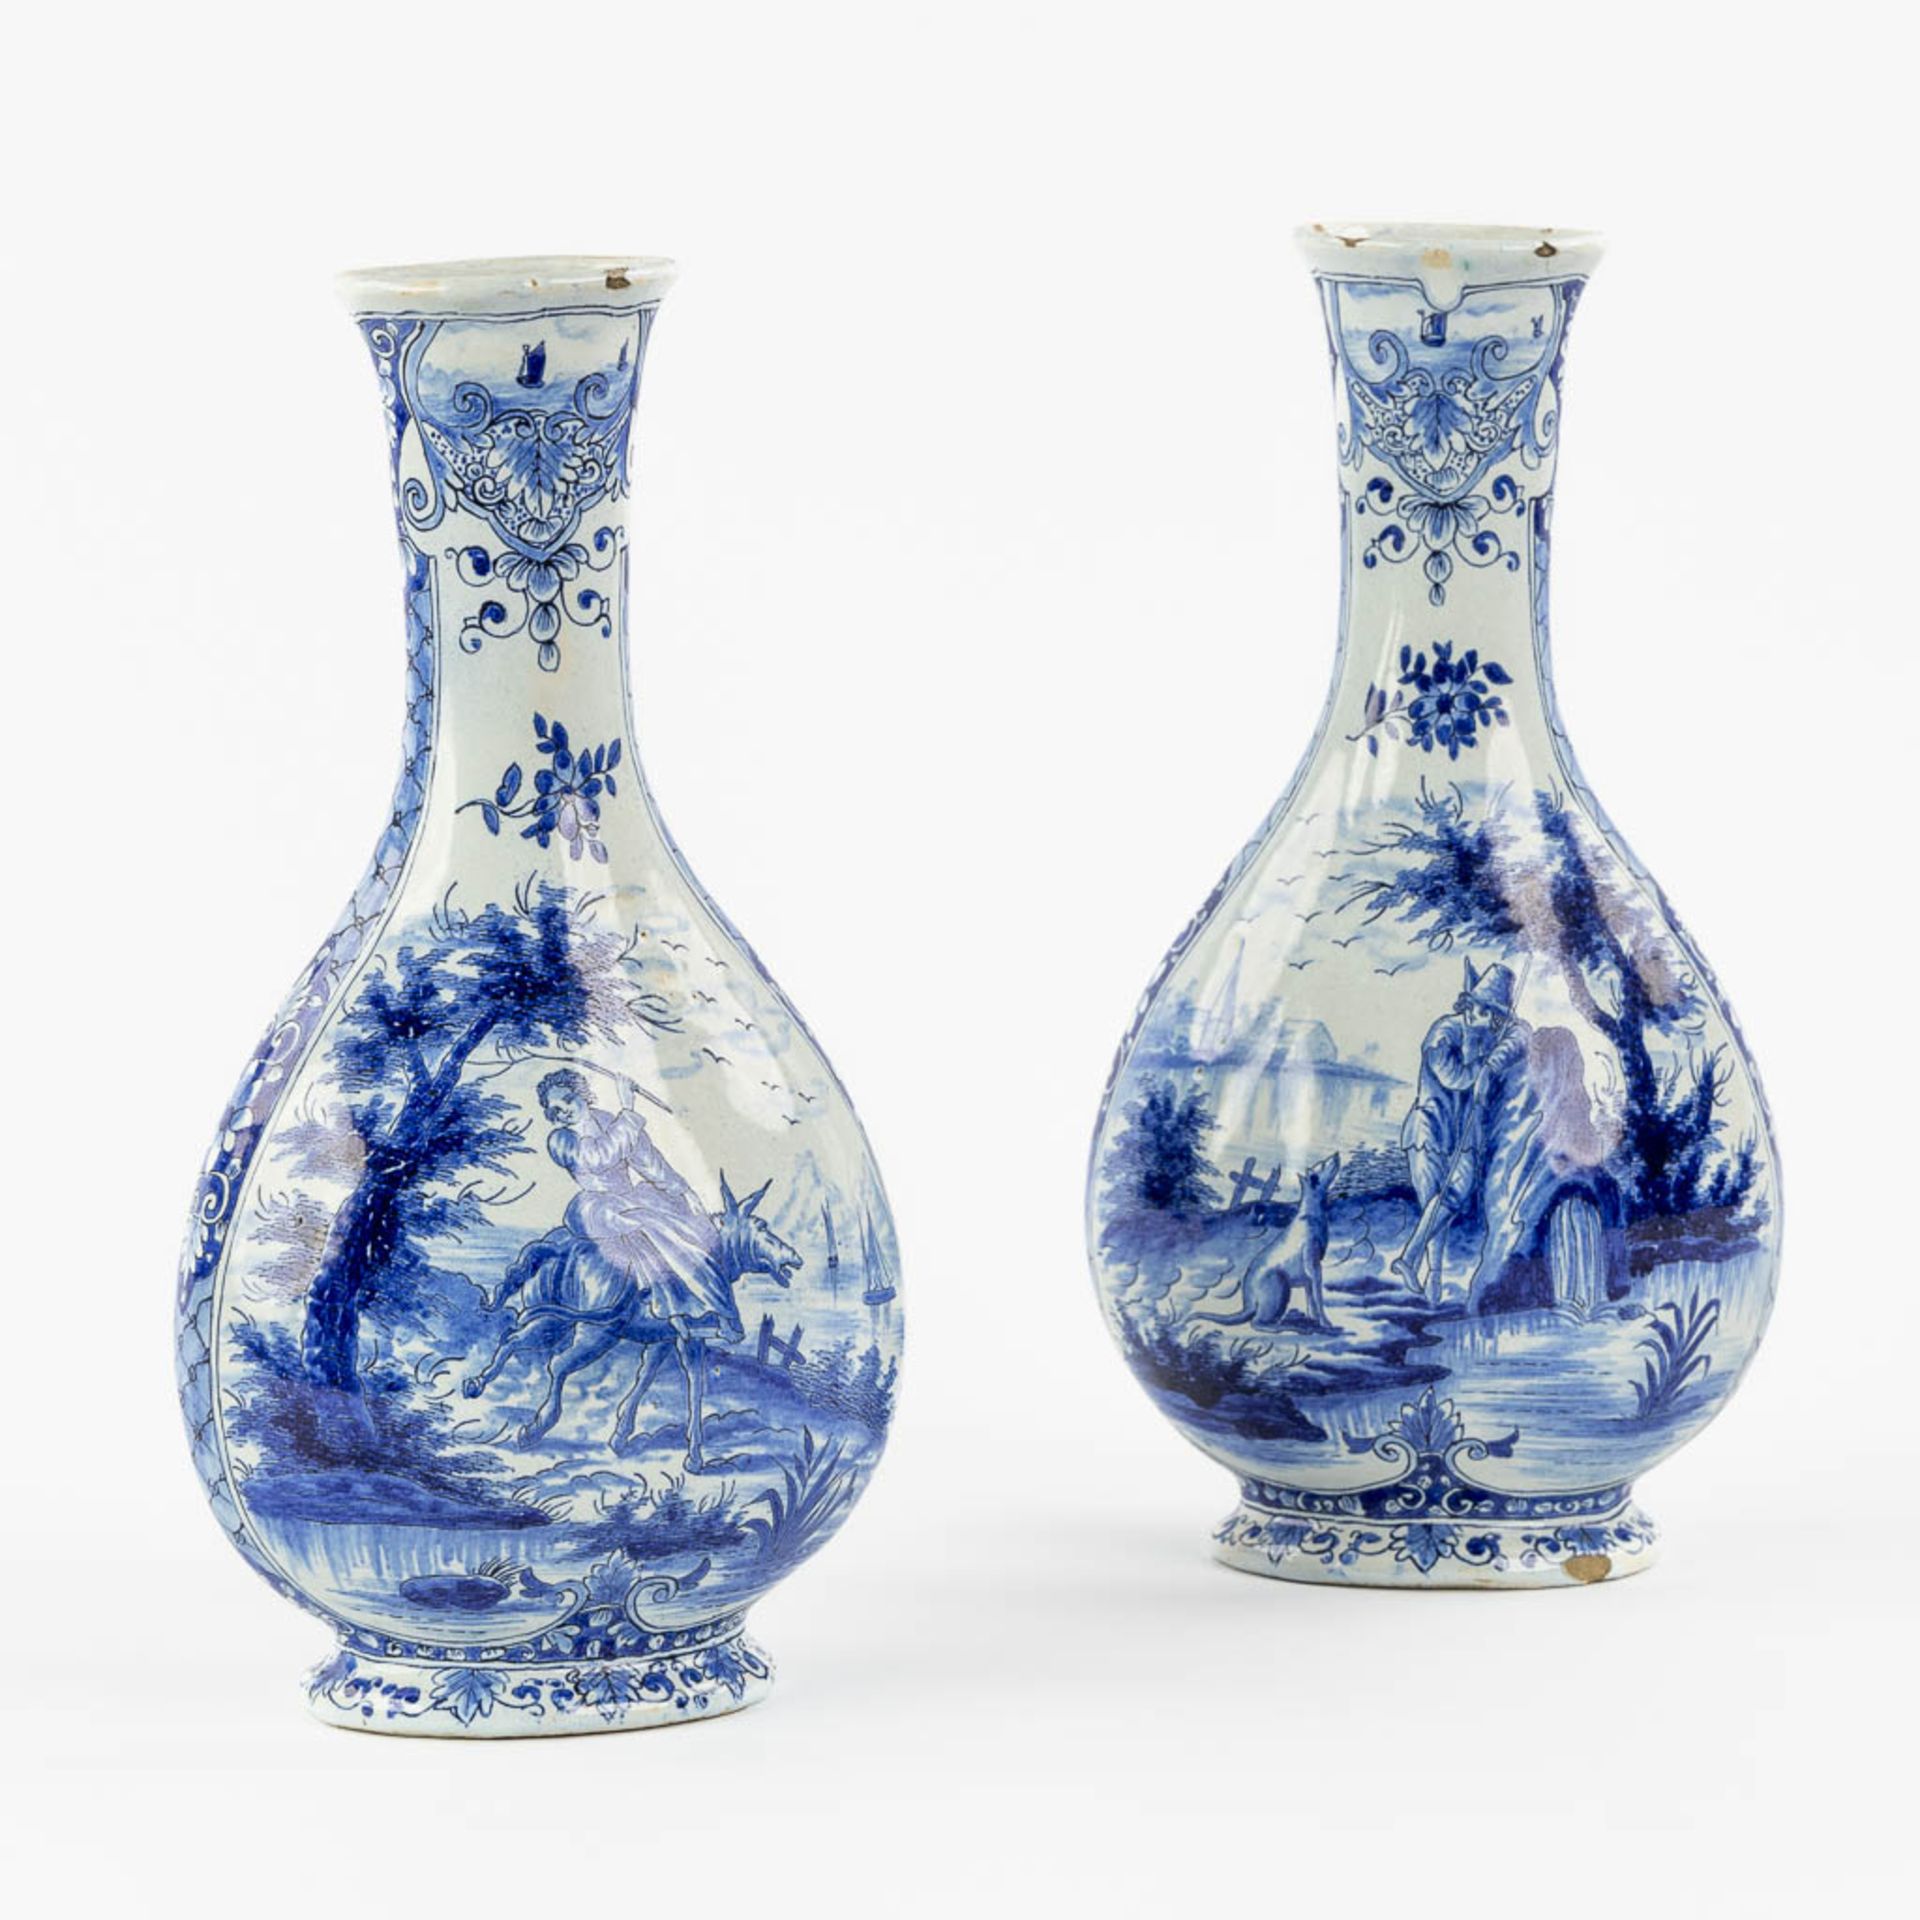 Geertrui Verstelle, Delft, a pair of vases with a landscape decor. Mid 18th C. (L:9 x W:14 x H:26,5 